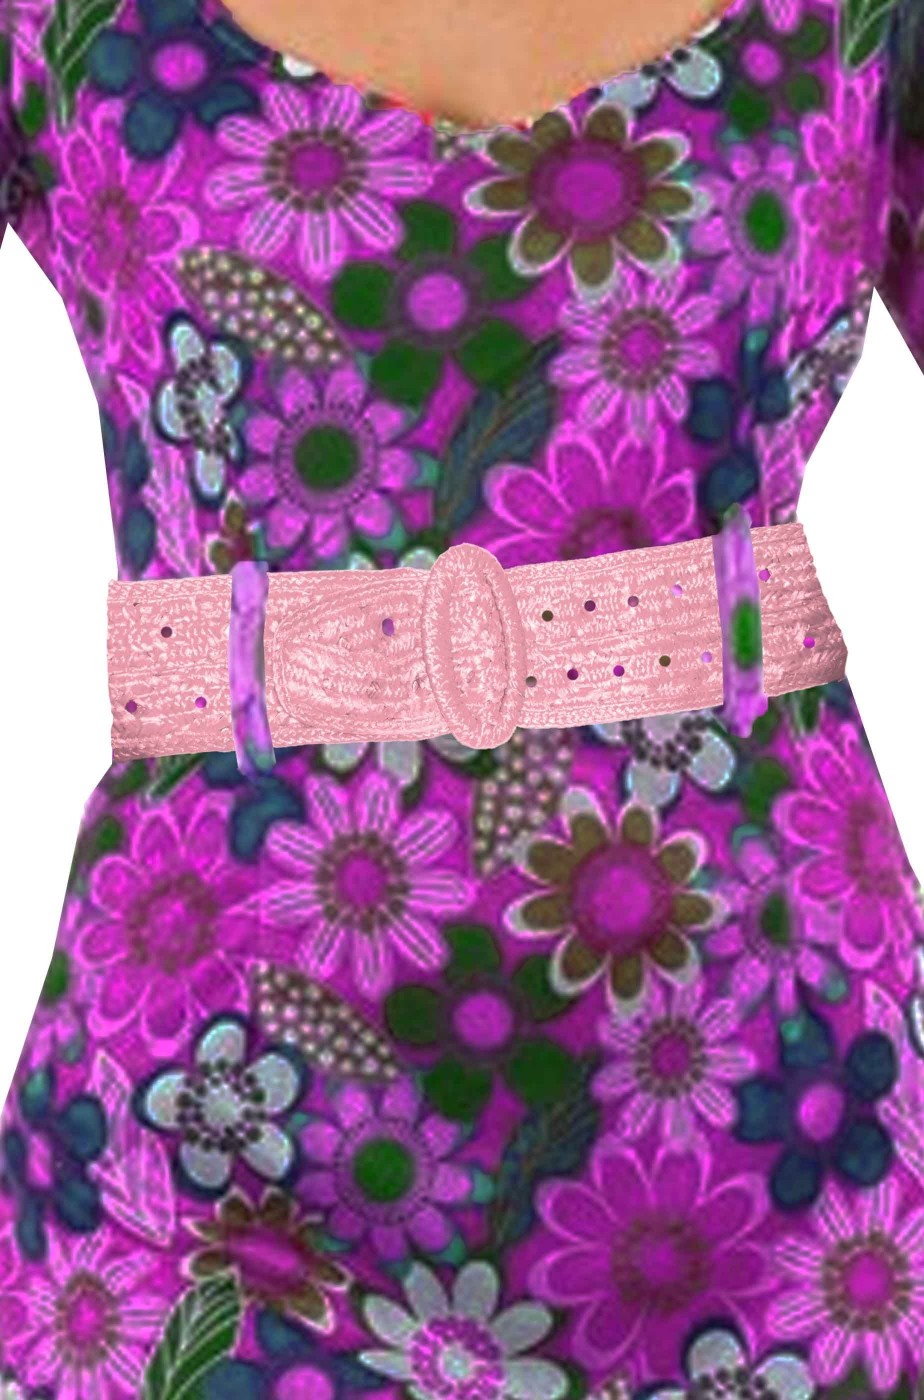 Cintura da donna stile anni 70 hippie o flower power rosa antico